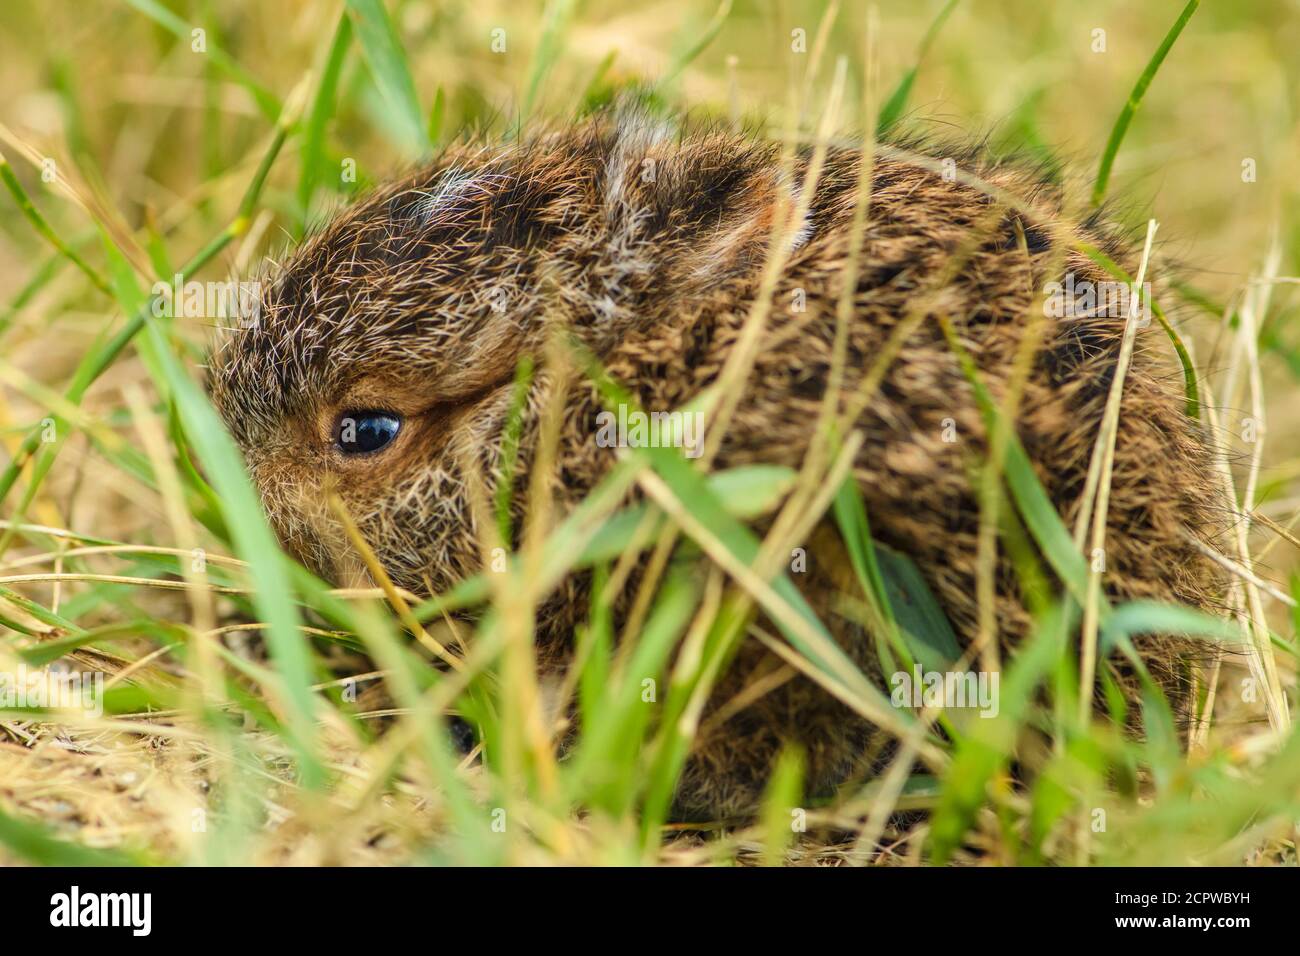 Varying/snowshoe hare (Lepus americanus) Newborn baby attempting to camouflage in grass, Greater Sudbury, Ontario, Canada Stock Photo